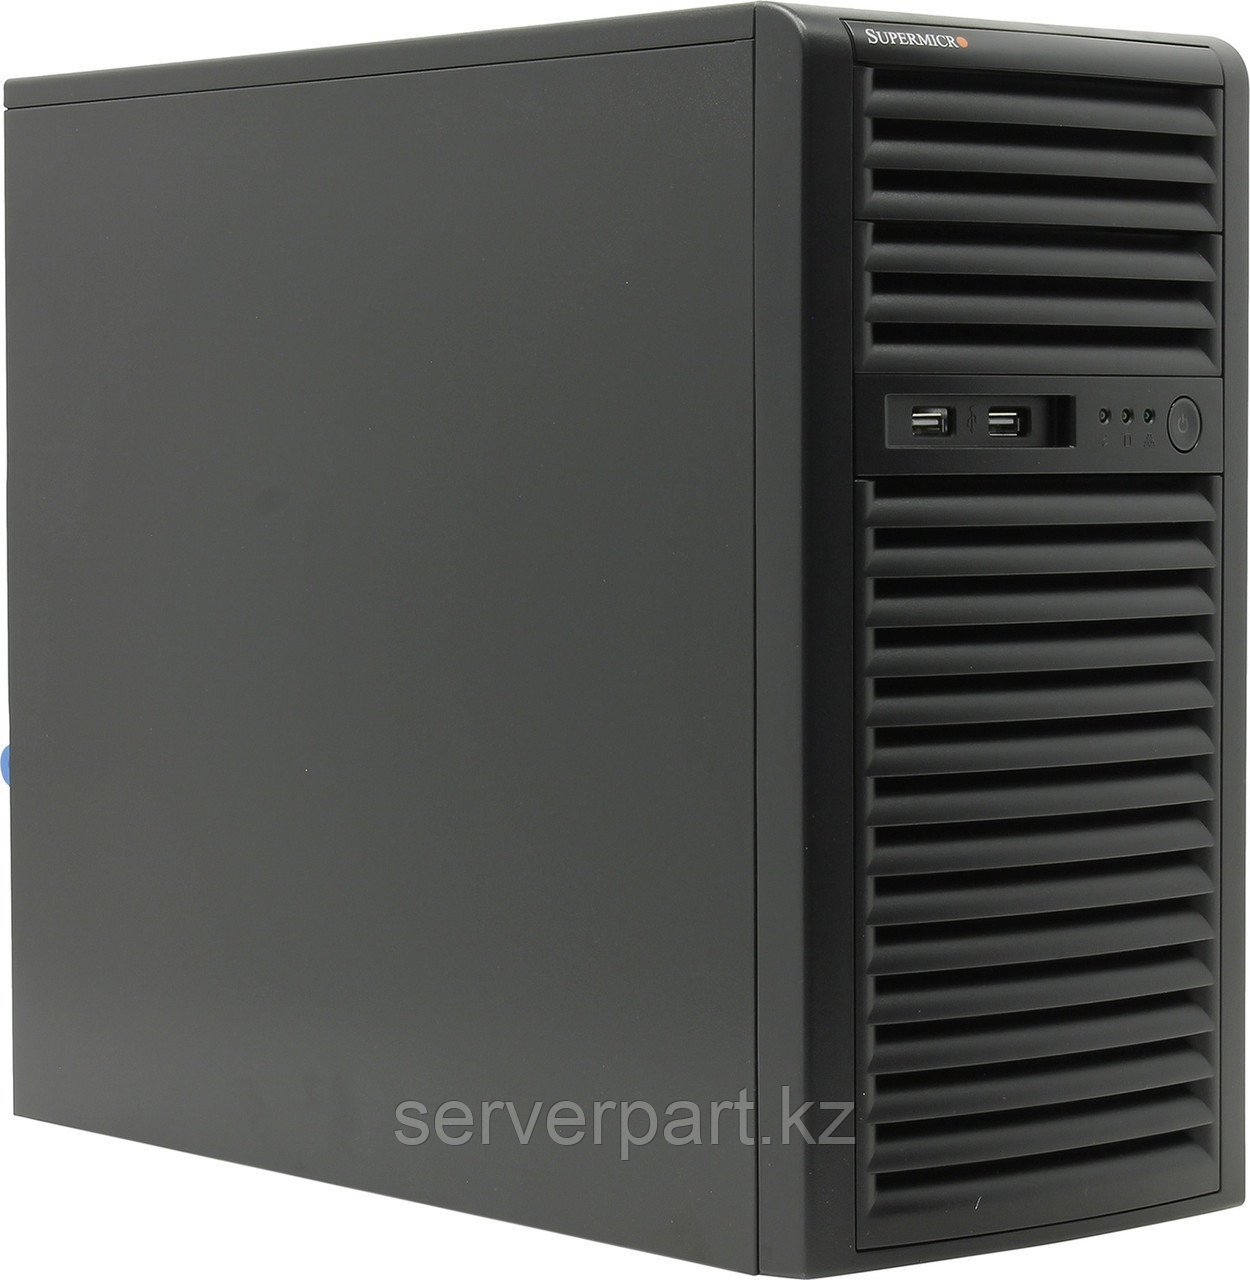 Сервер Supermicro 5039D Tower/4-core intel xeon E3-1220v6 3GHz/16GB UDIMM nECC/1x480GB SSD MU Hyb, фото 1